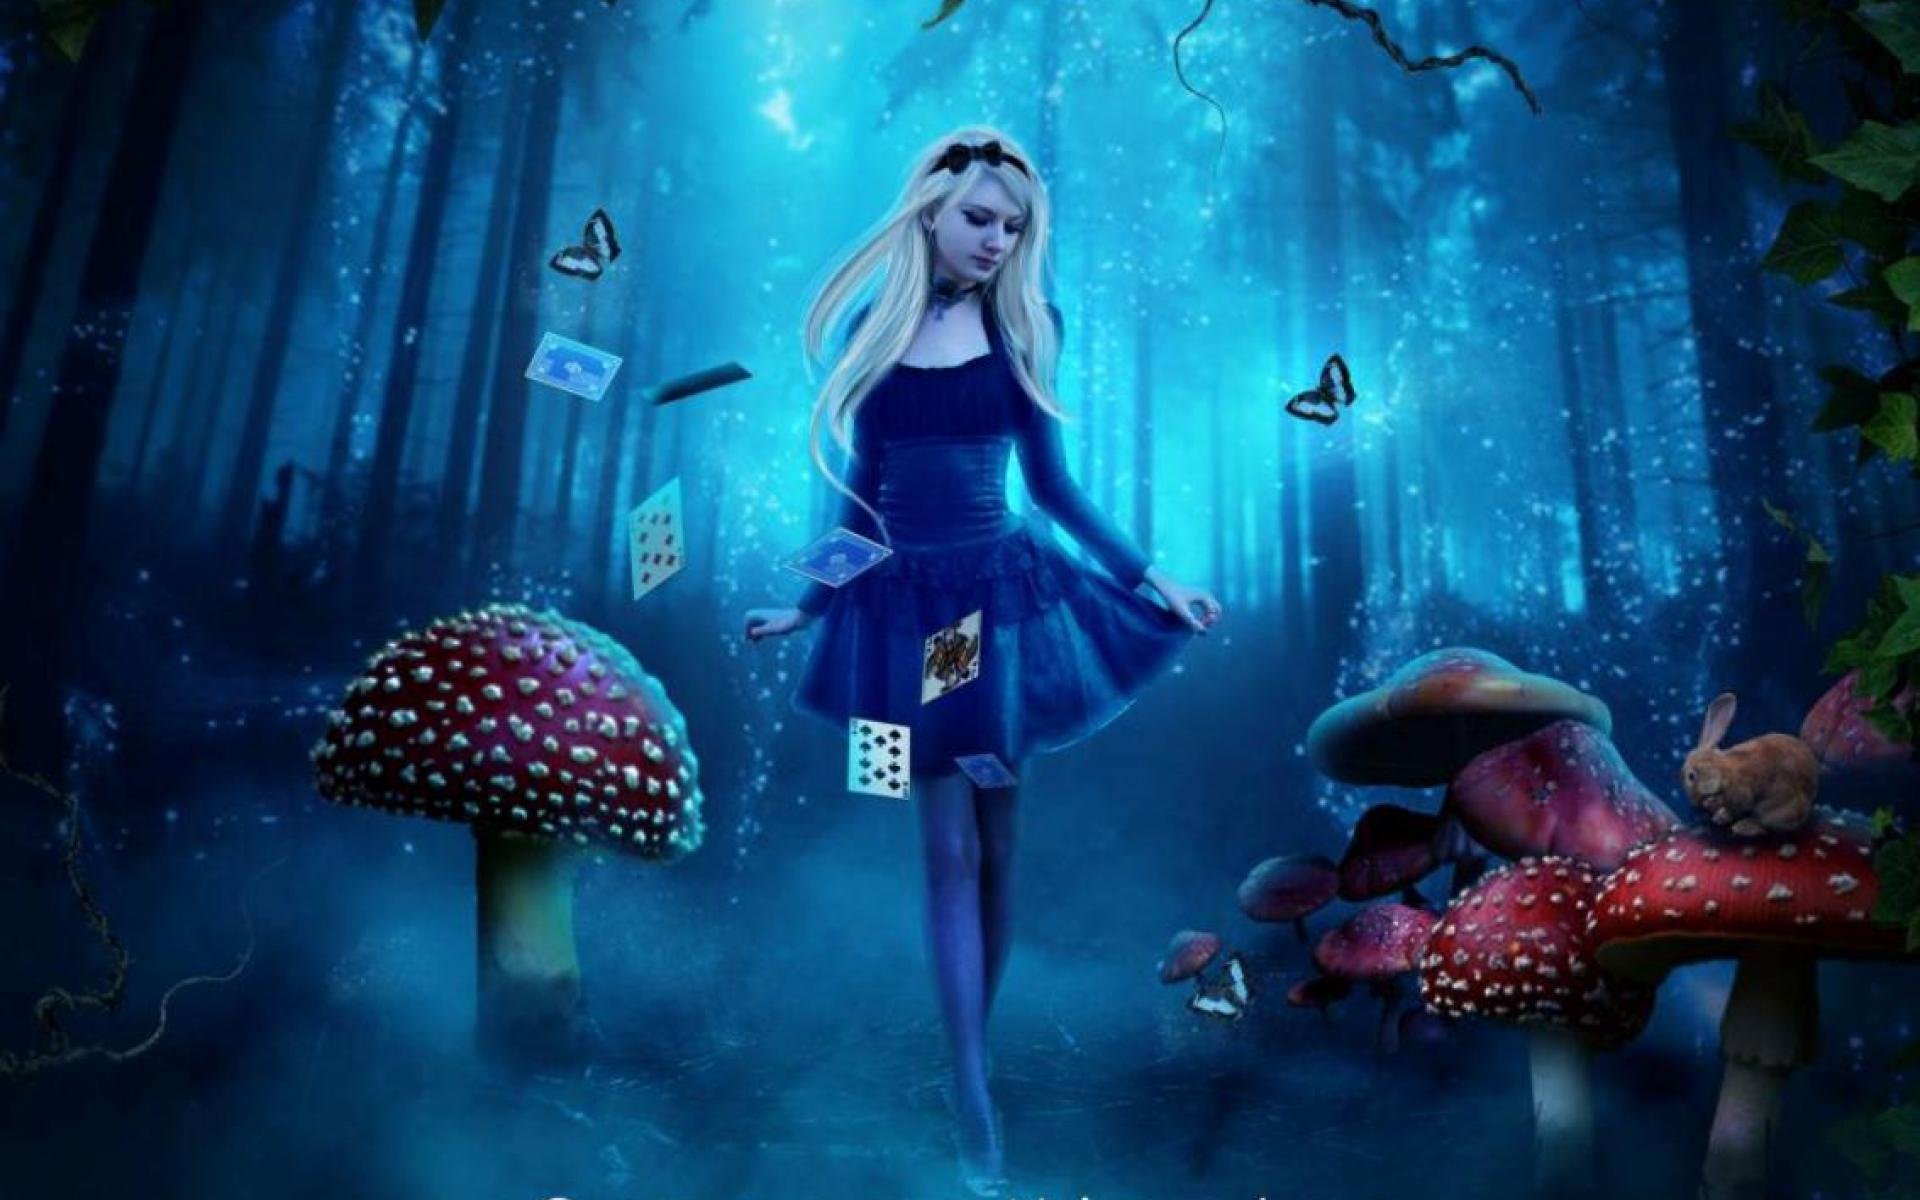 Алиса в стране чудес Зазеркалье лес